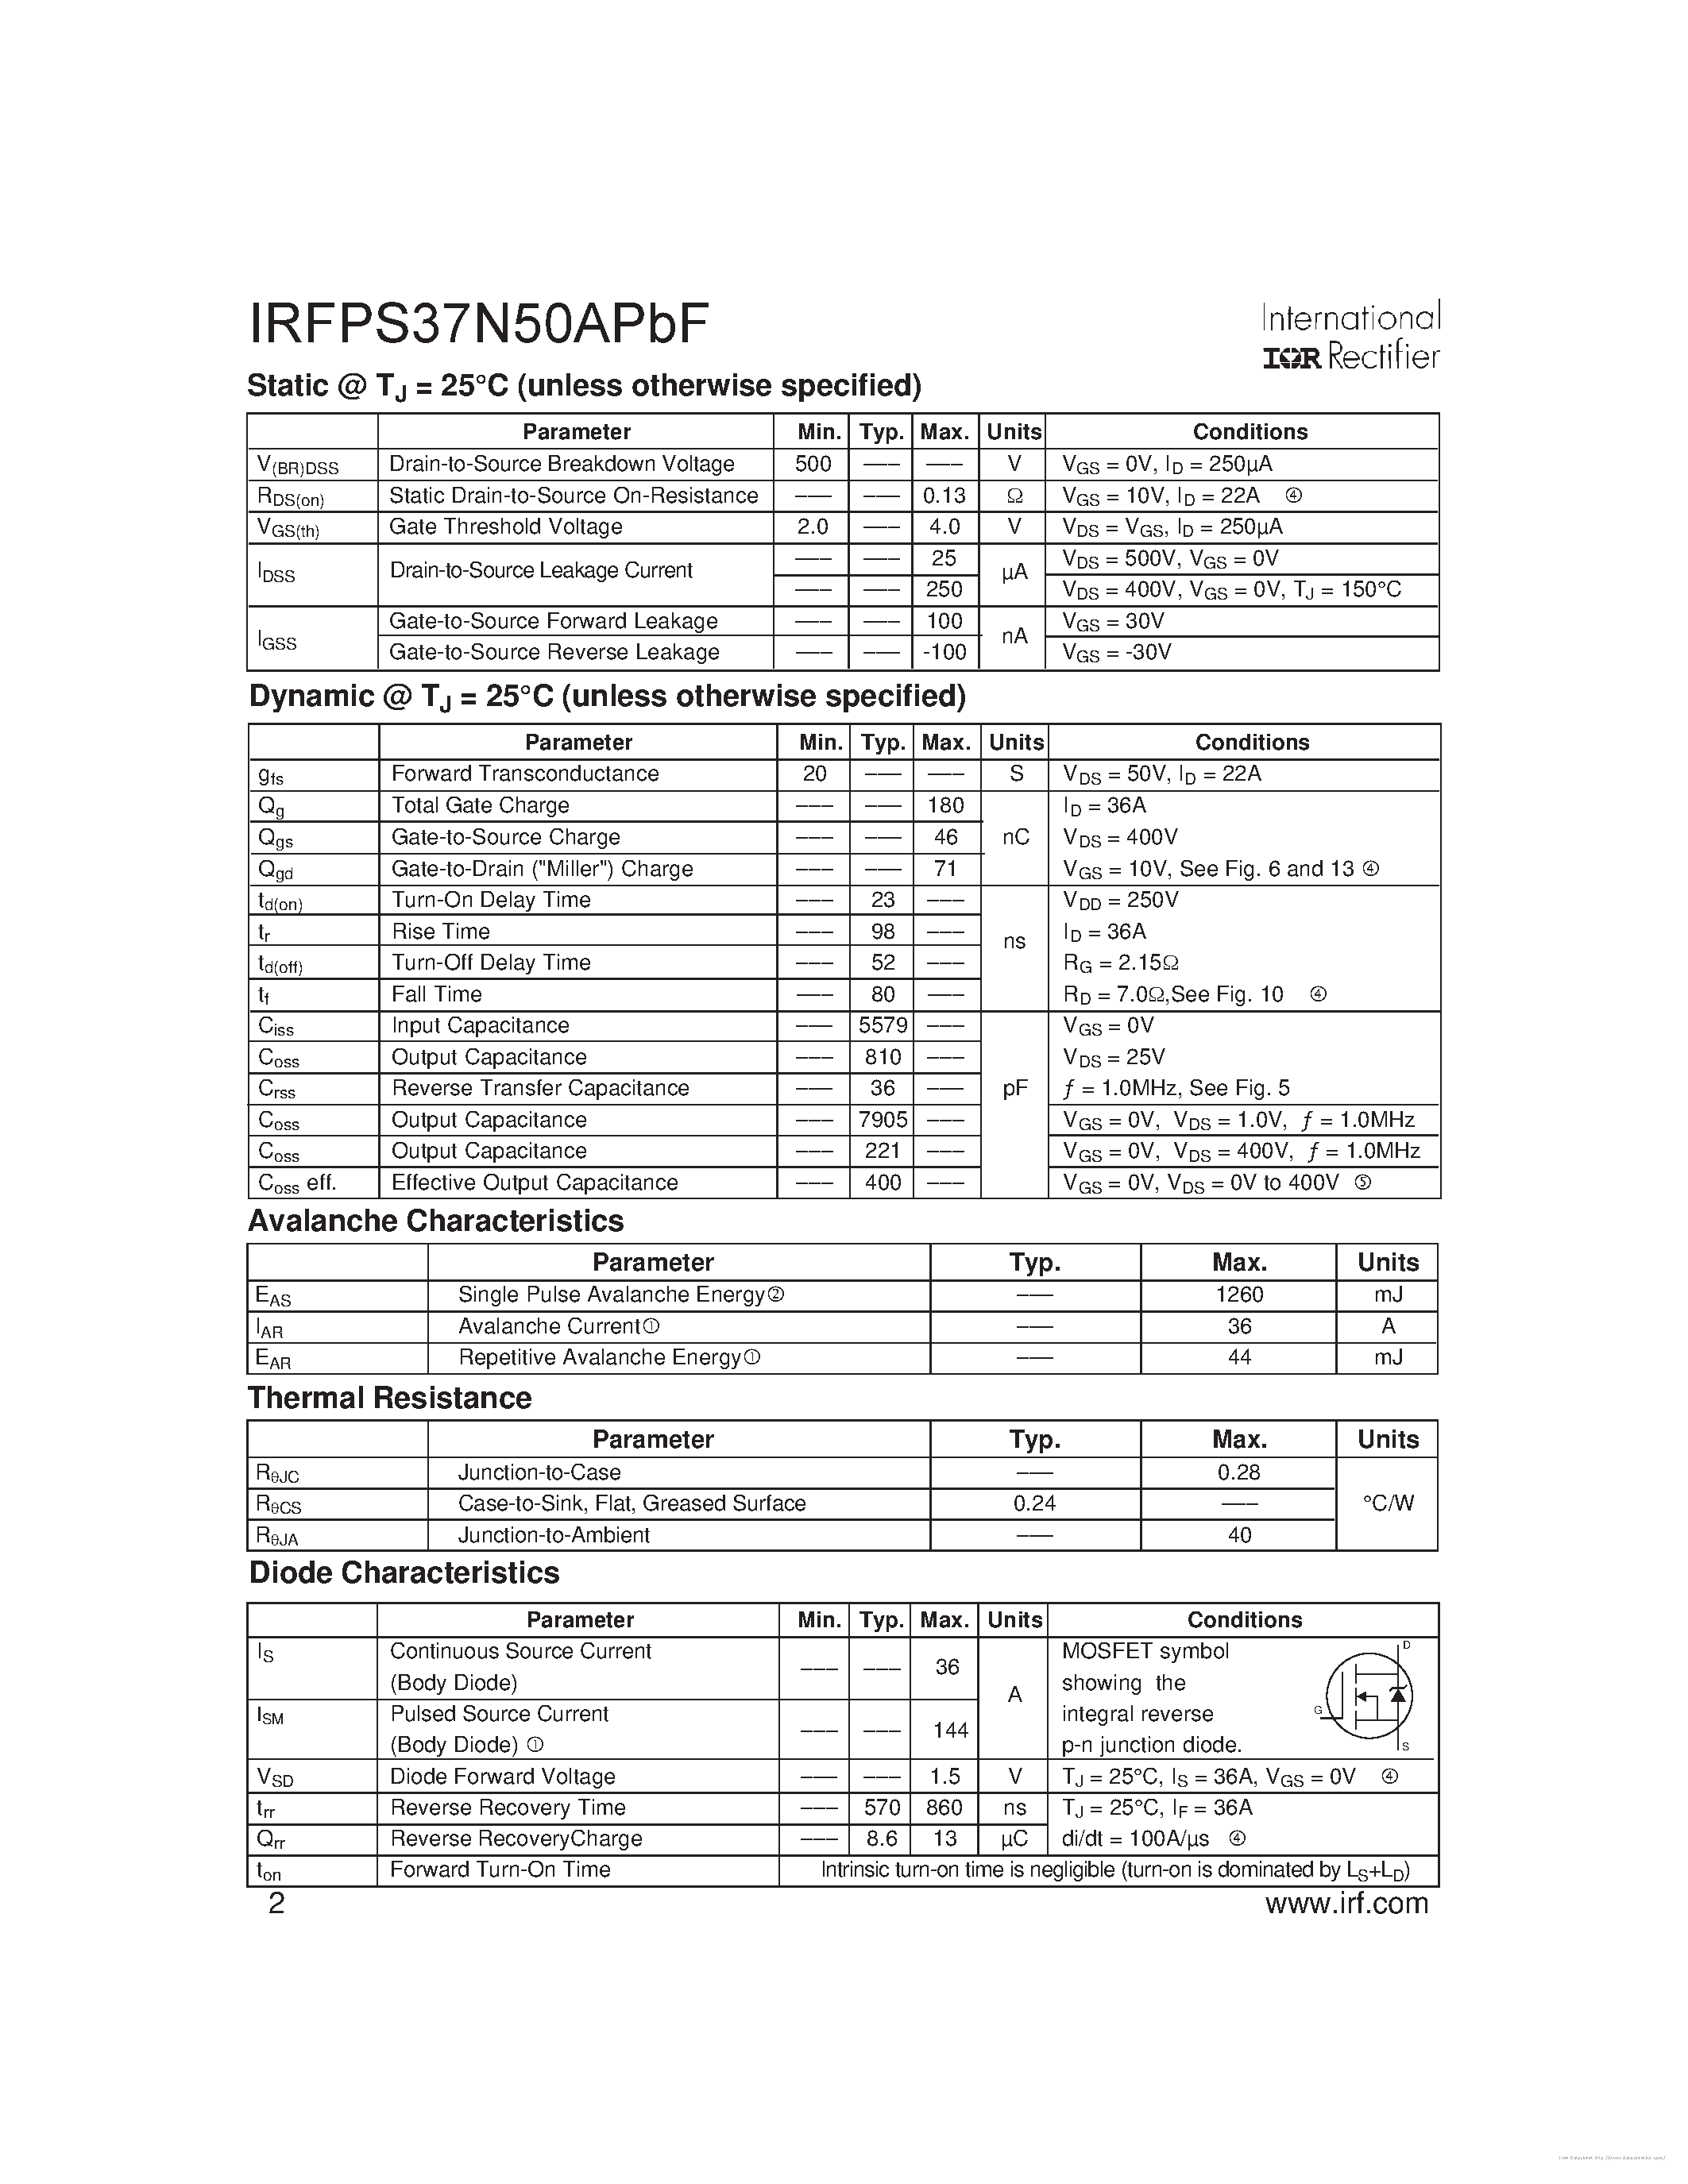 Datasheet IRFPS37N50APBF - page 2